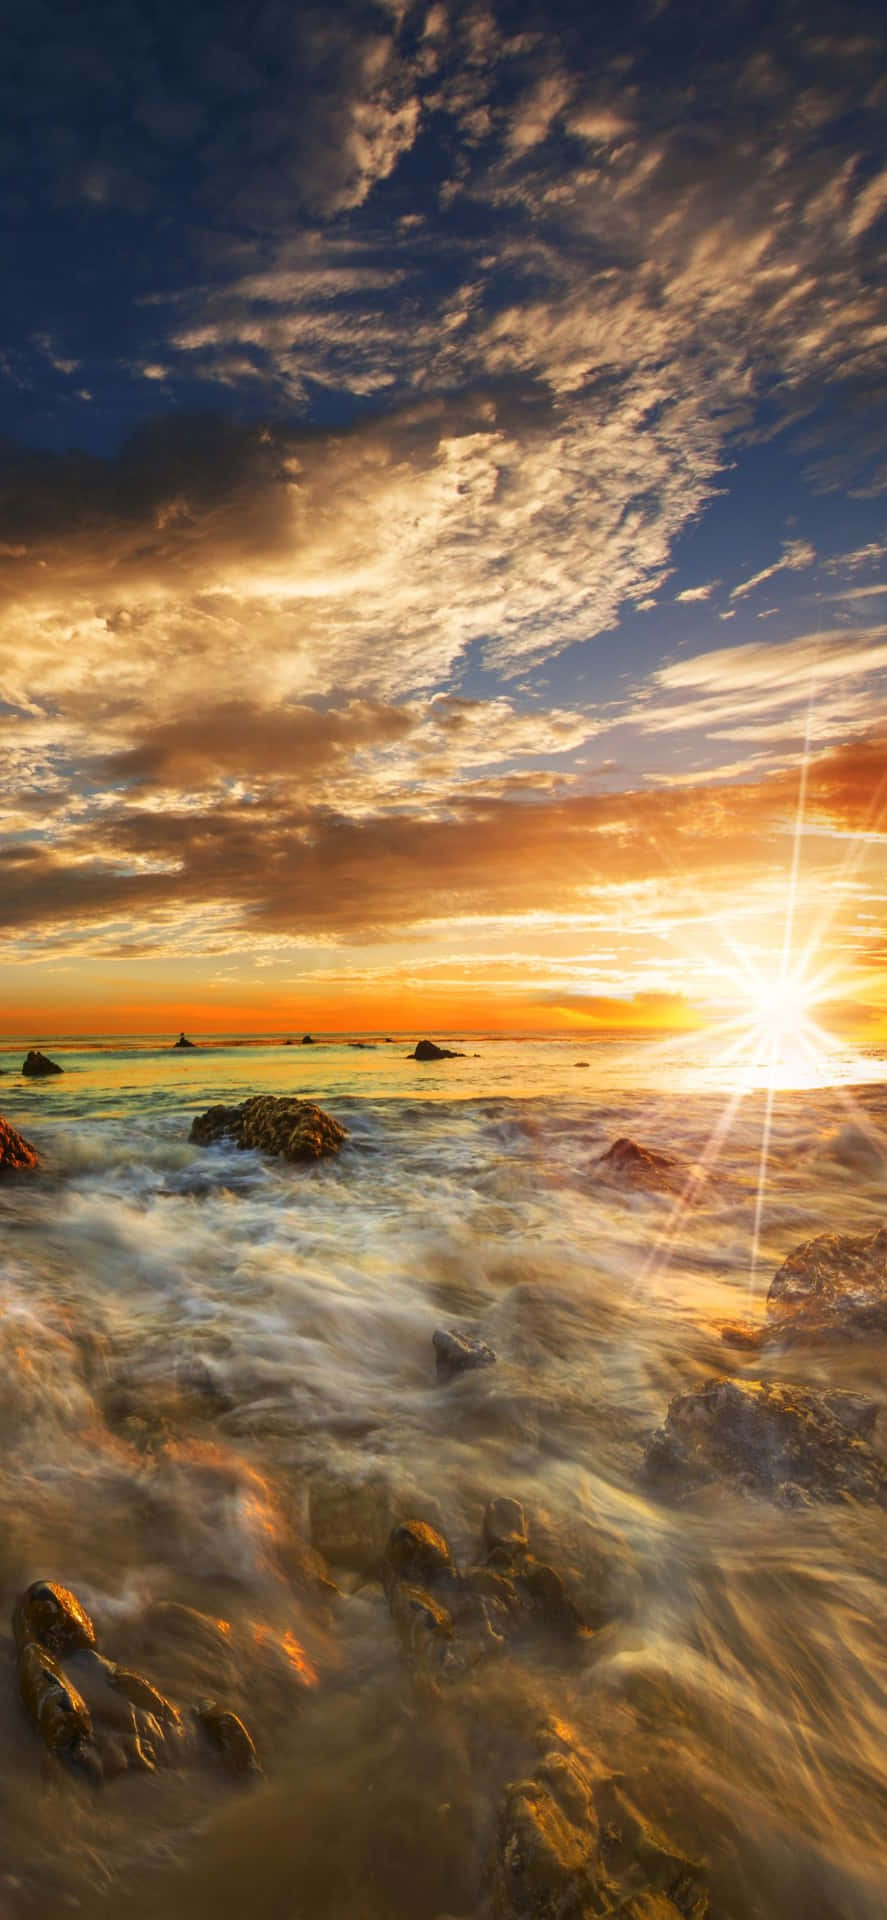 Take in the breathtaking ocean views with Iphone Xs Malibu